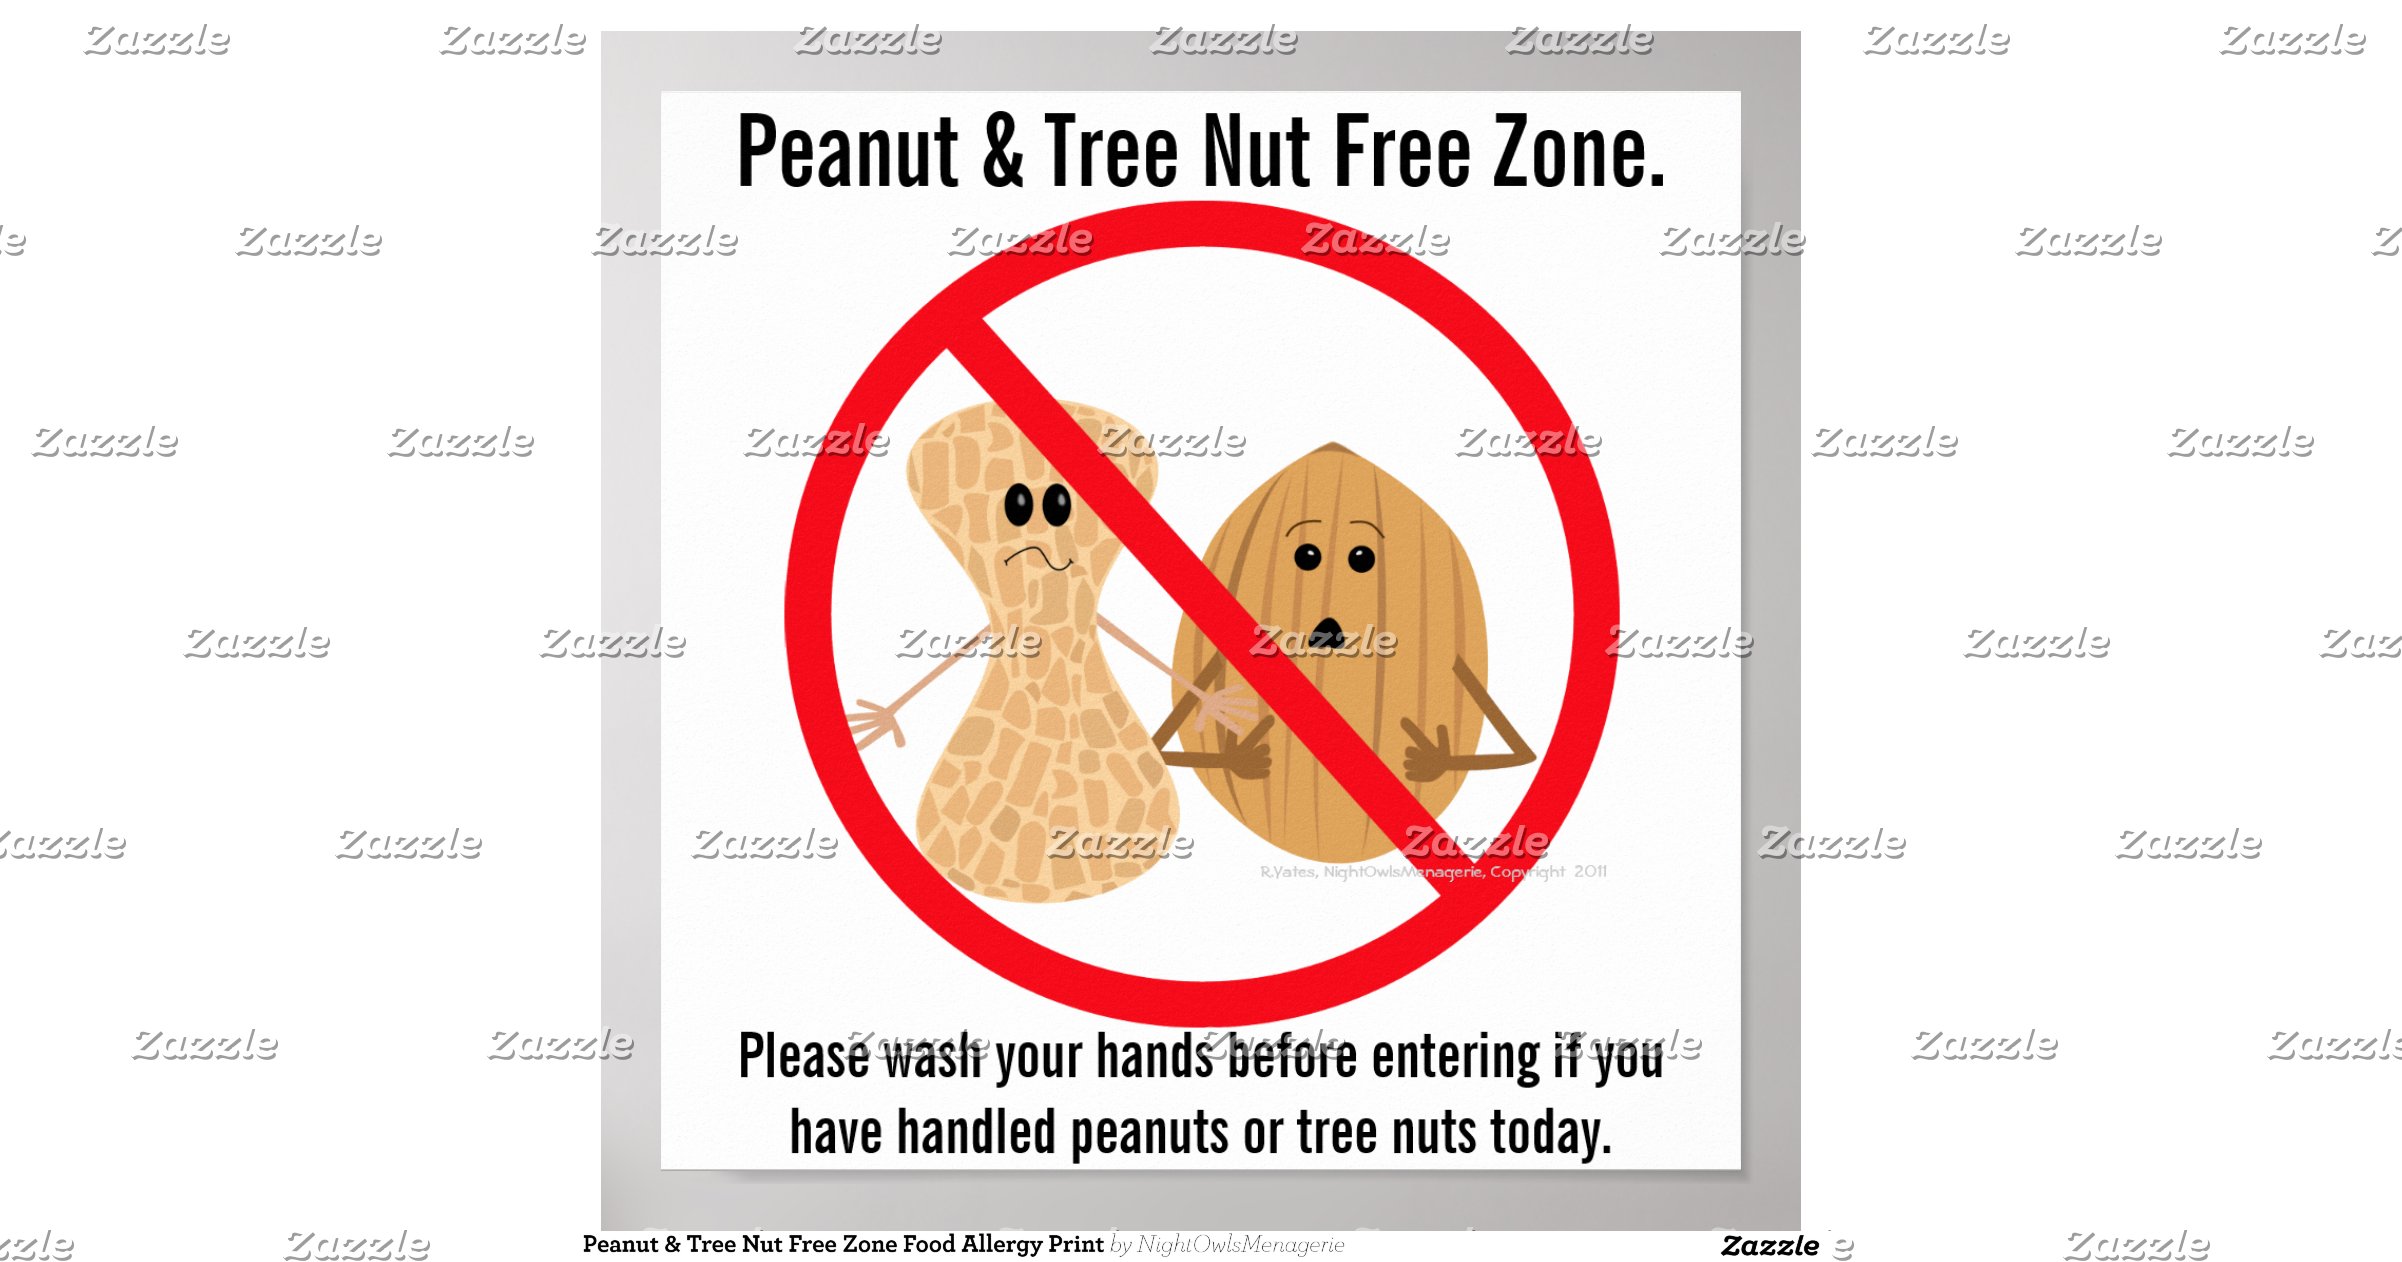 peanut_tree_nut_free_zone_food_allergy_print-re63eb5547e4f42d7a4c35ba82054637f_wad ...